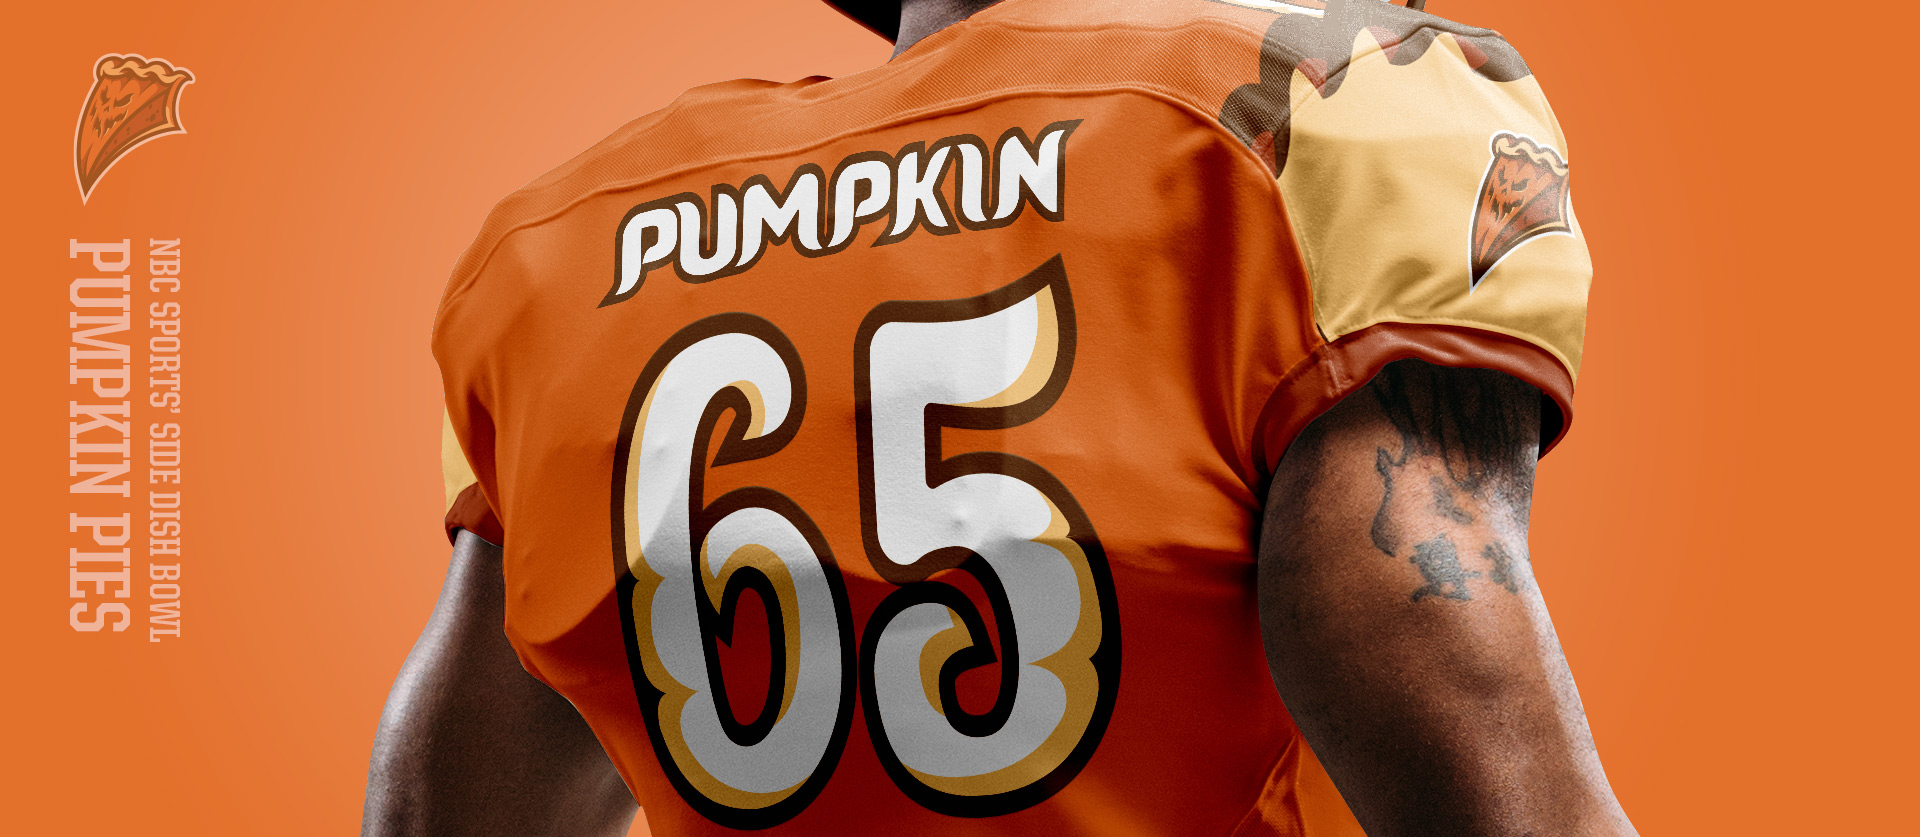 Pumpkin Pies Back - Football Uniform Design for NBC Sports Thanksgiving Side Dish Bowl